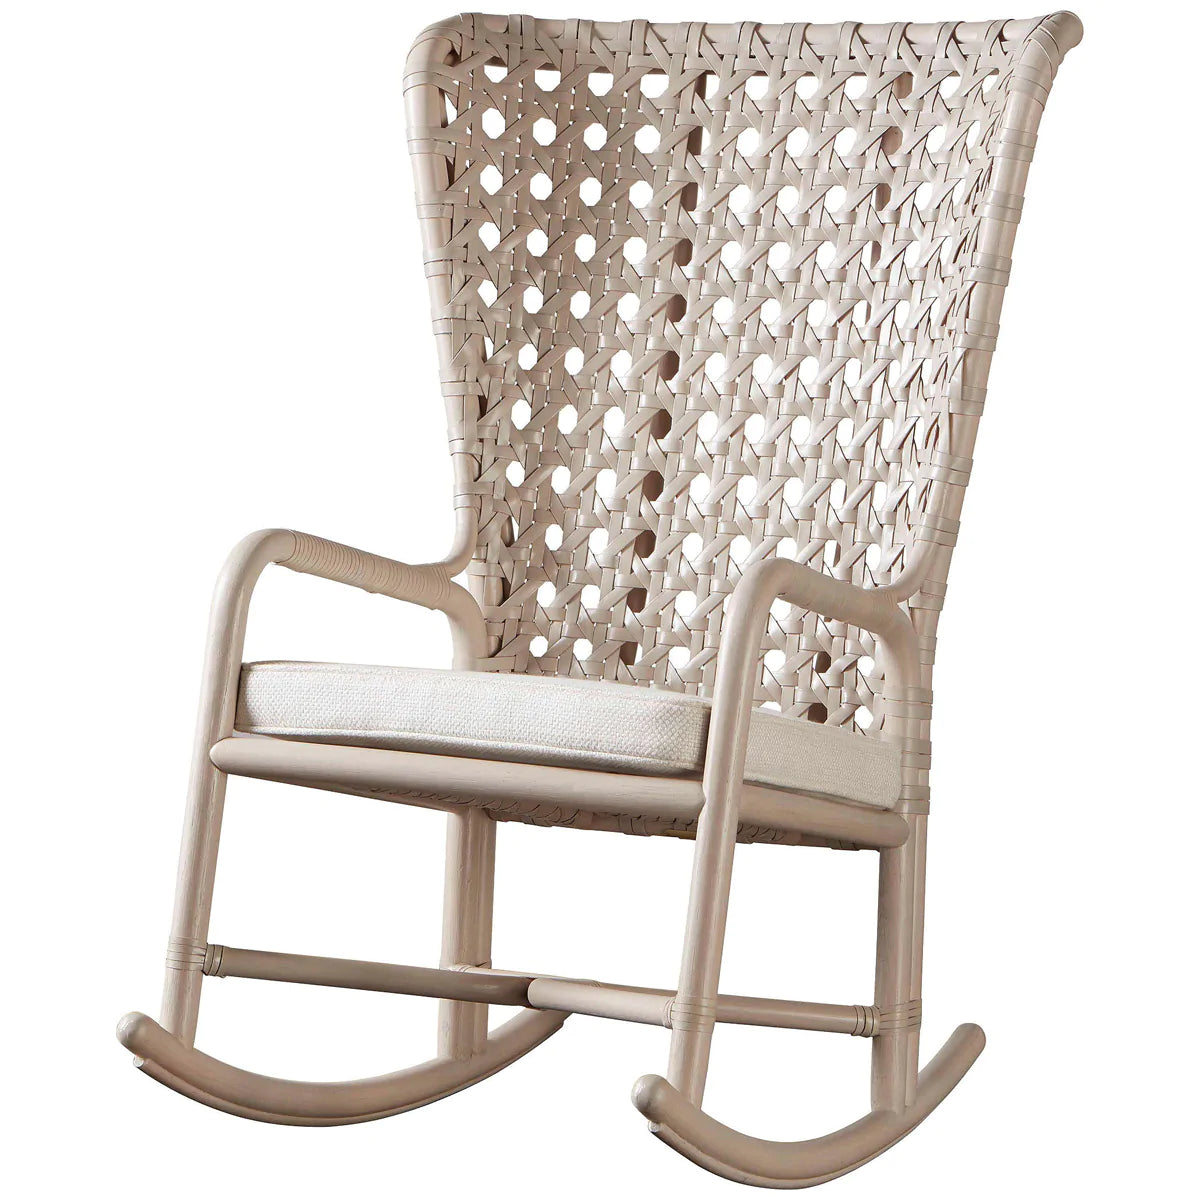 Baker Furniture Exalt Rocking Chair MCMR144, Naturale